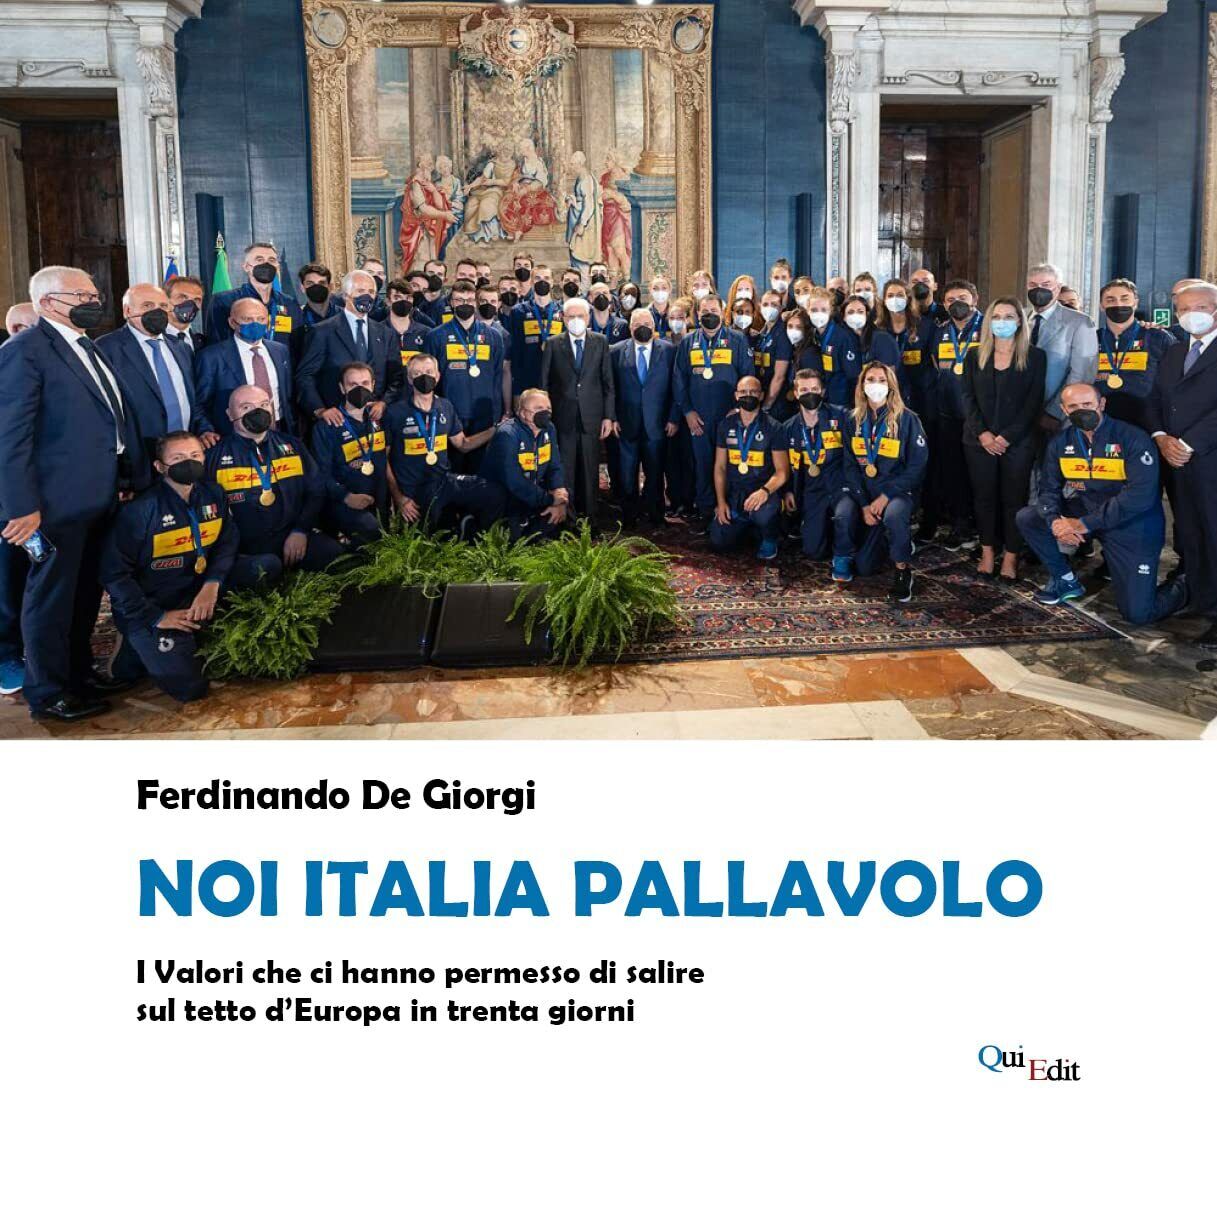 Noi Italia pallavolo - Ferdinando De Giorgi - QuiEdit, 2021 libro usato